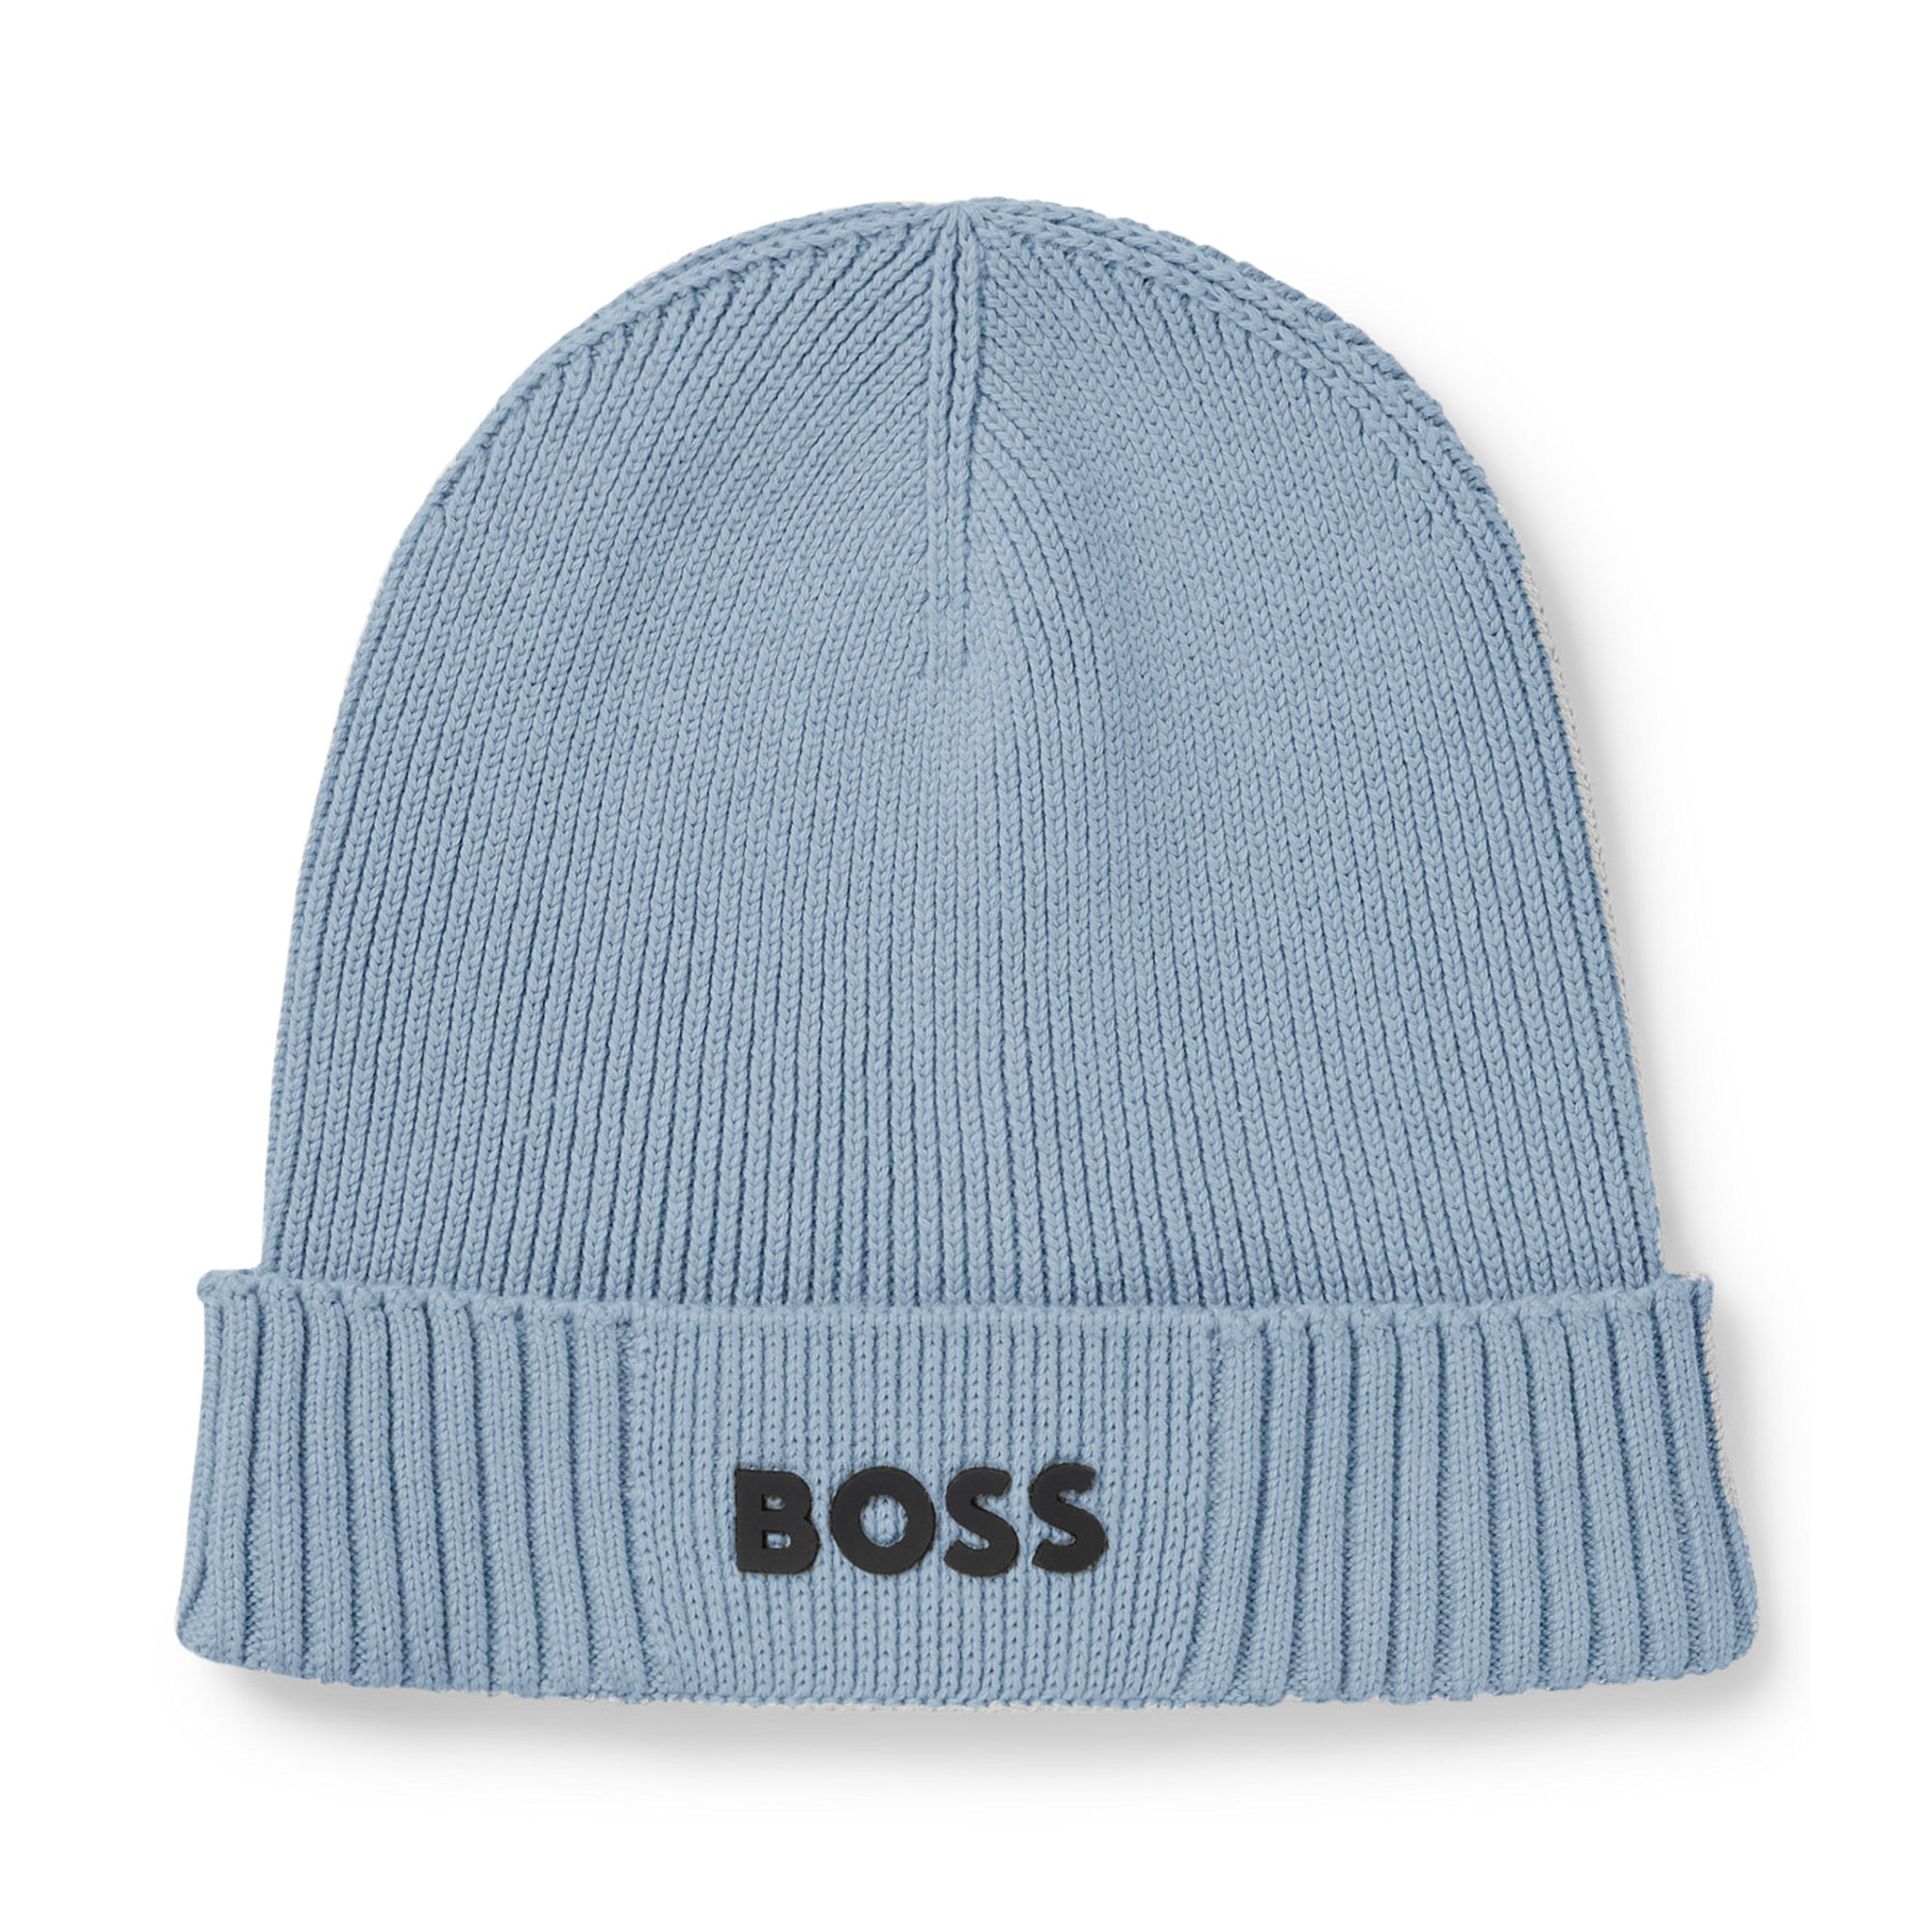 Boss Asic Beanie X Hat - Baby Blue